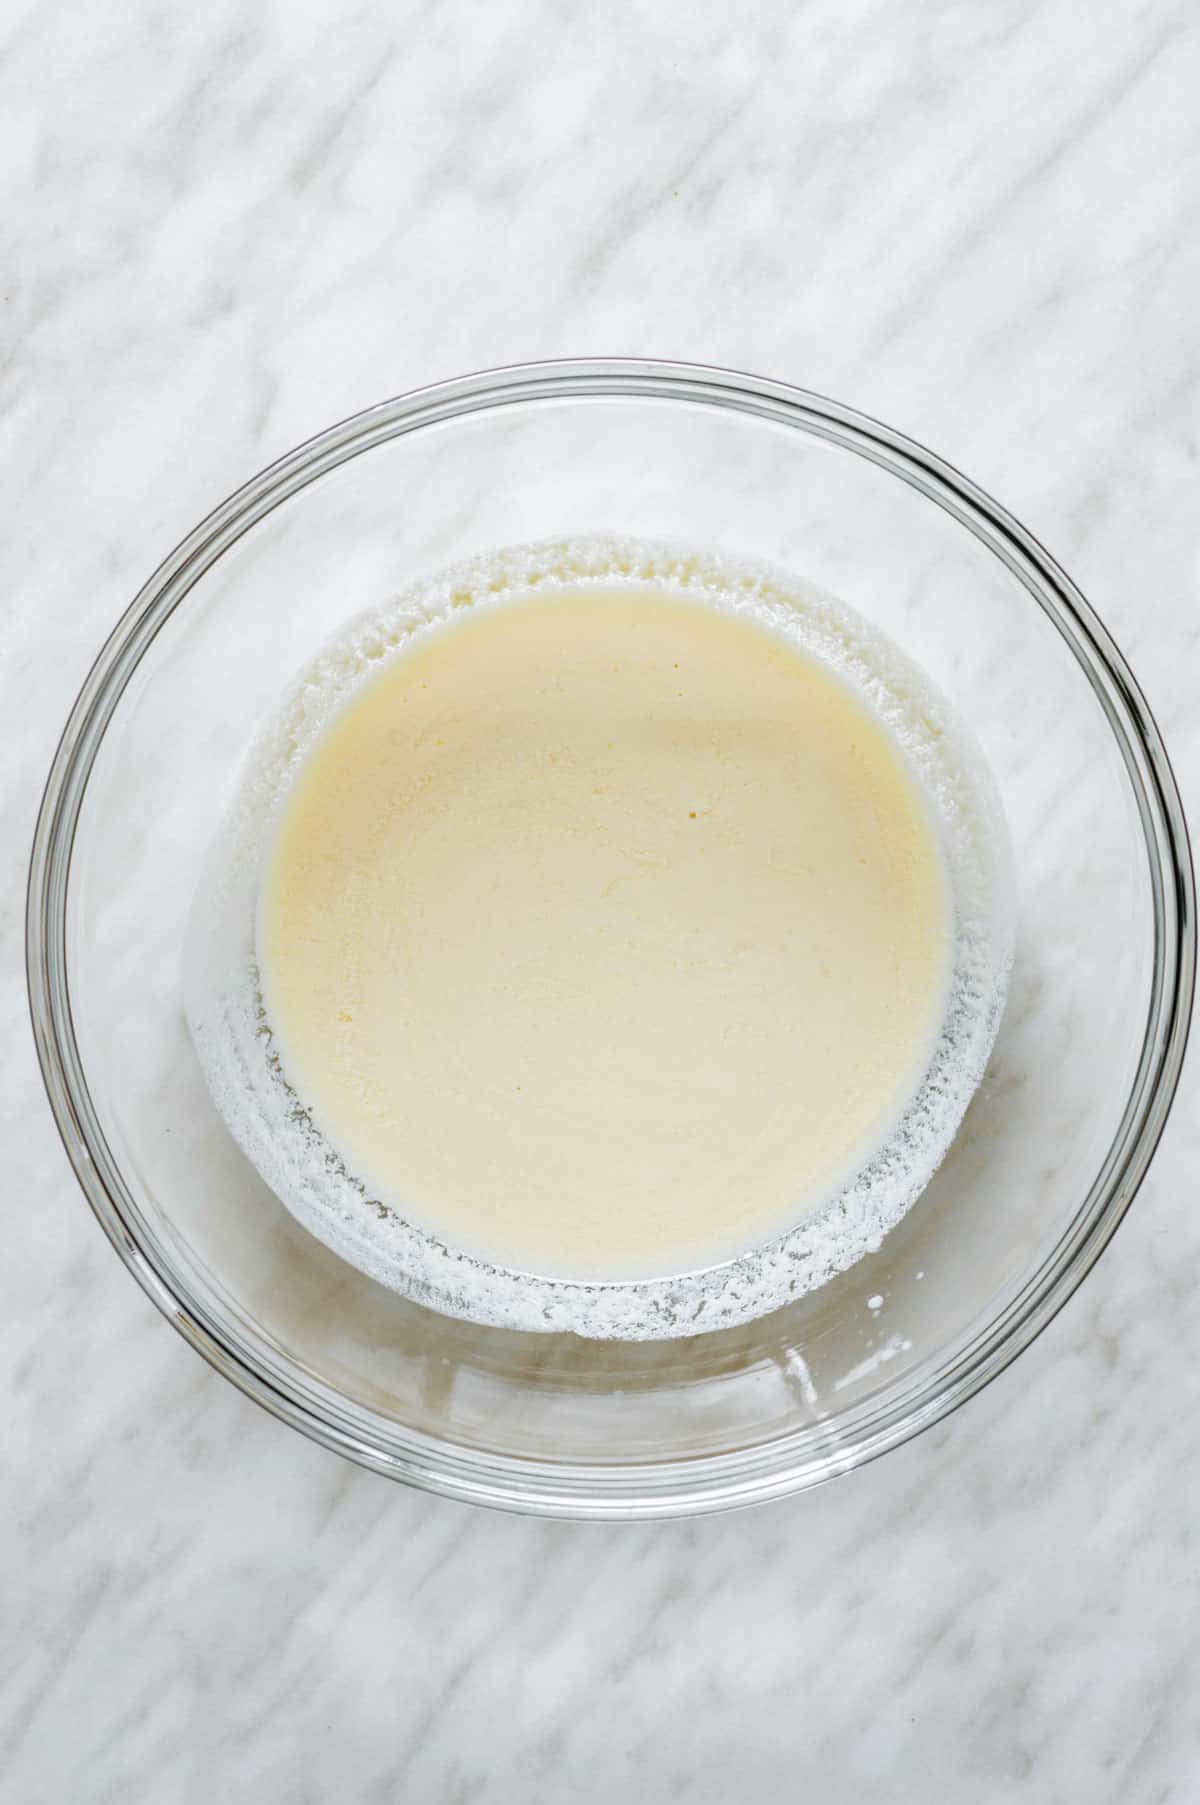 Vegan buttermilk in a glass mixing bowl.